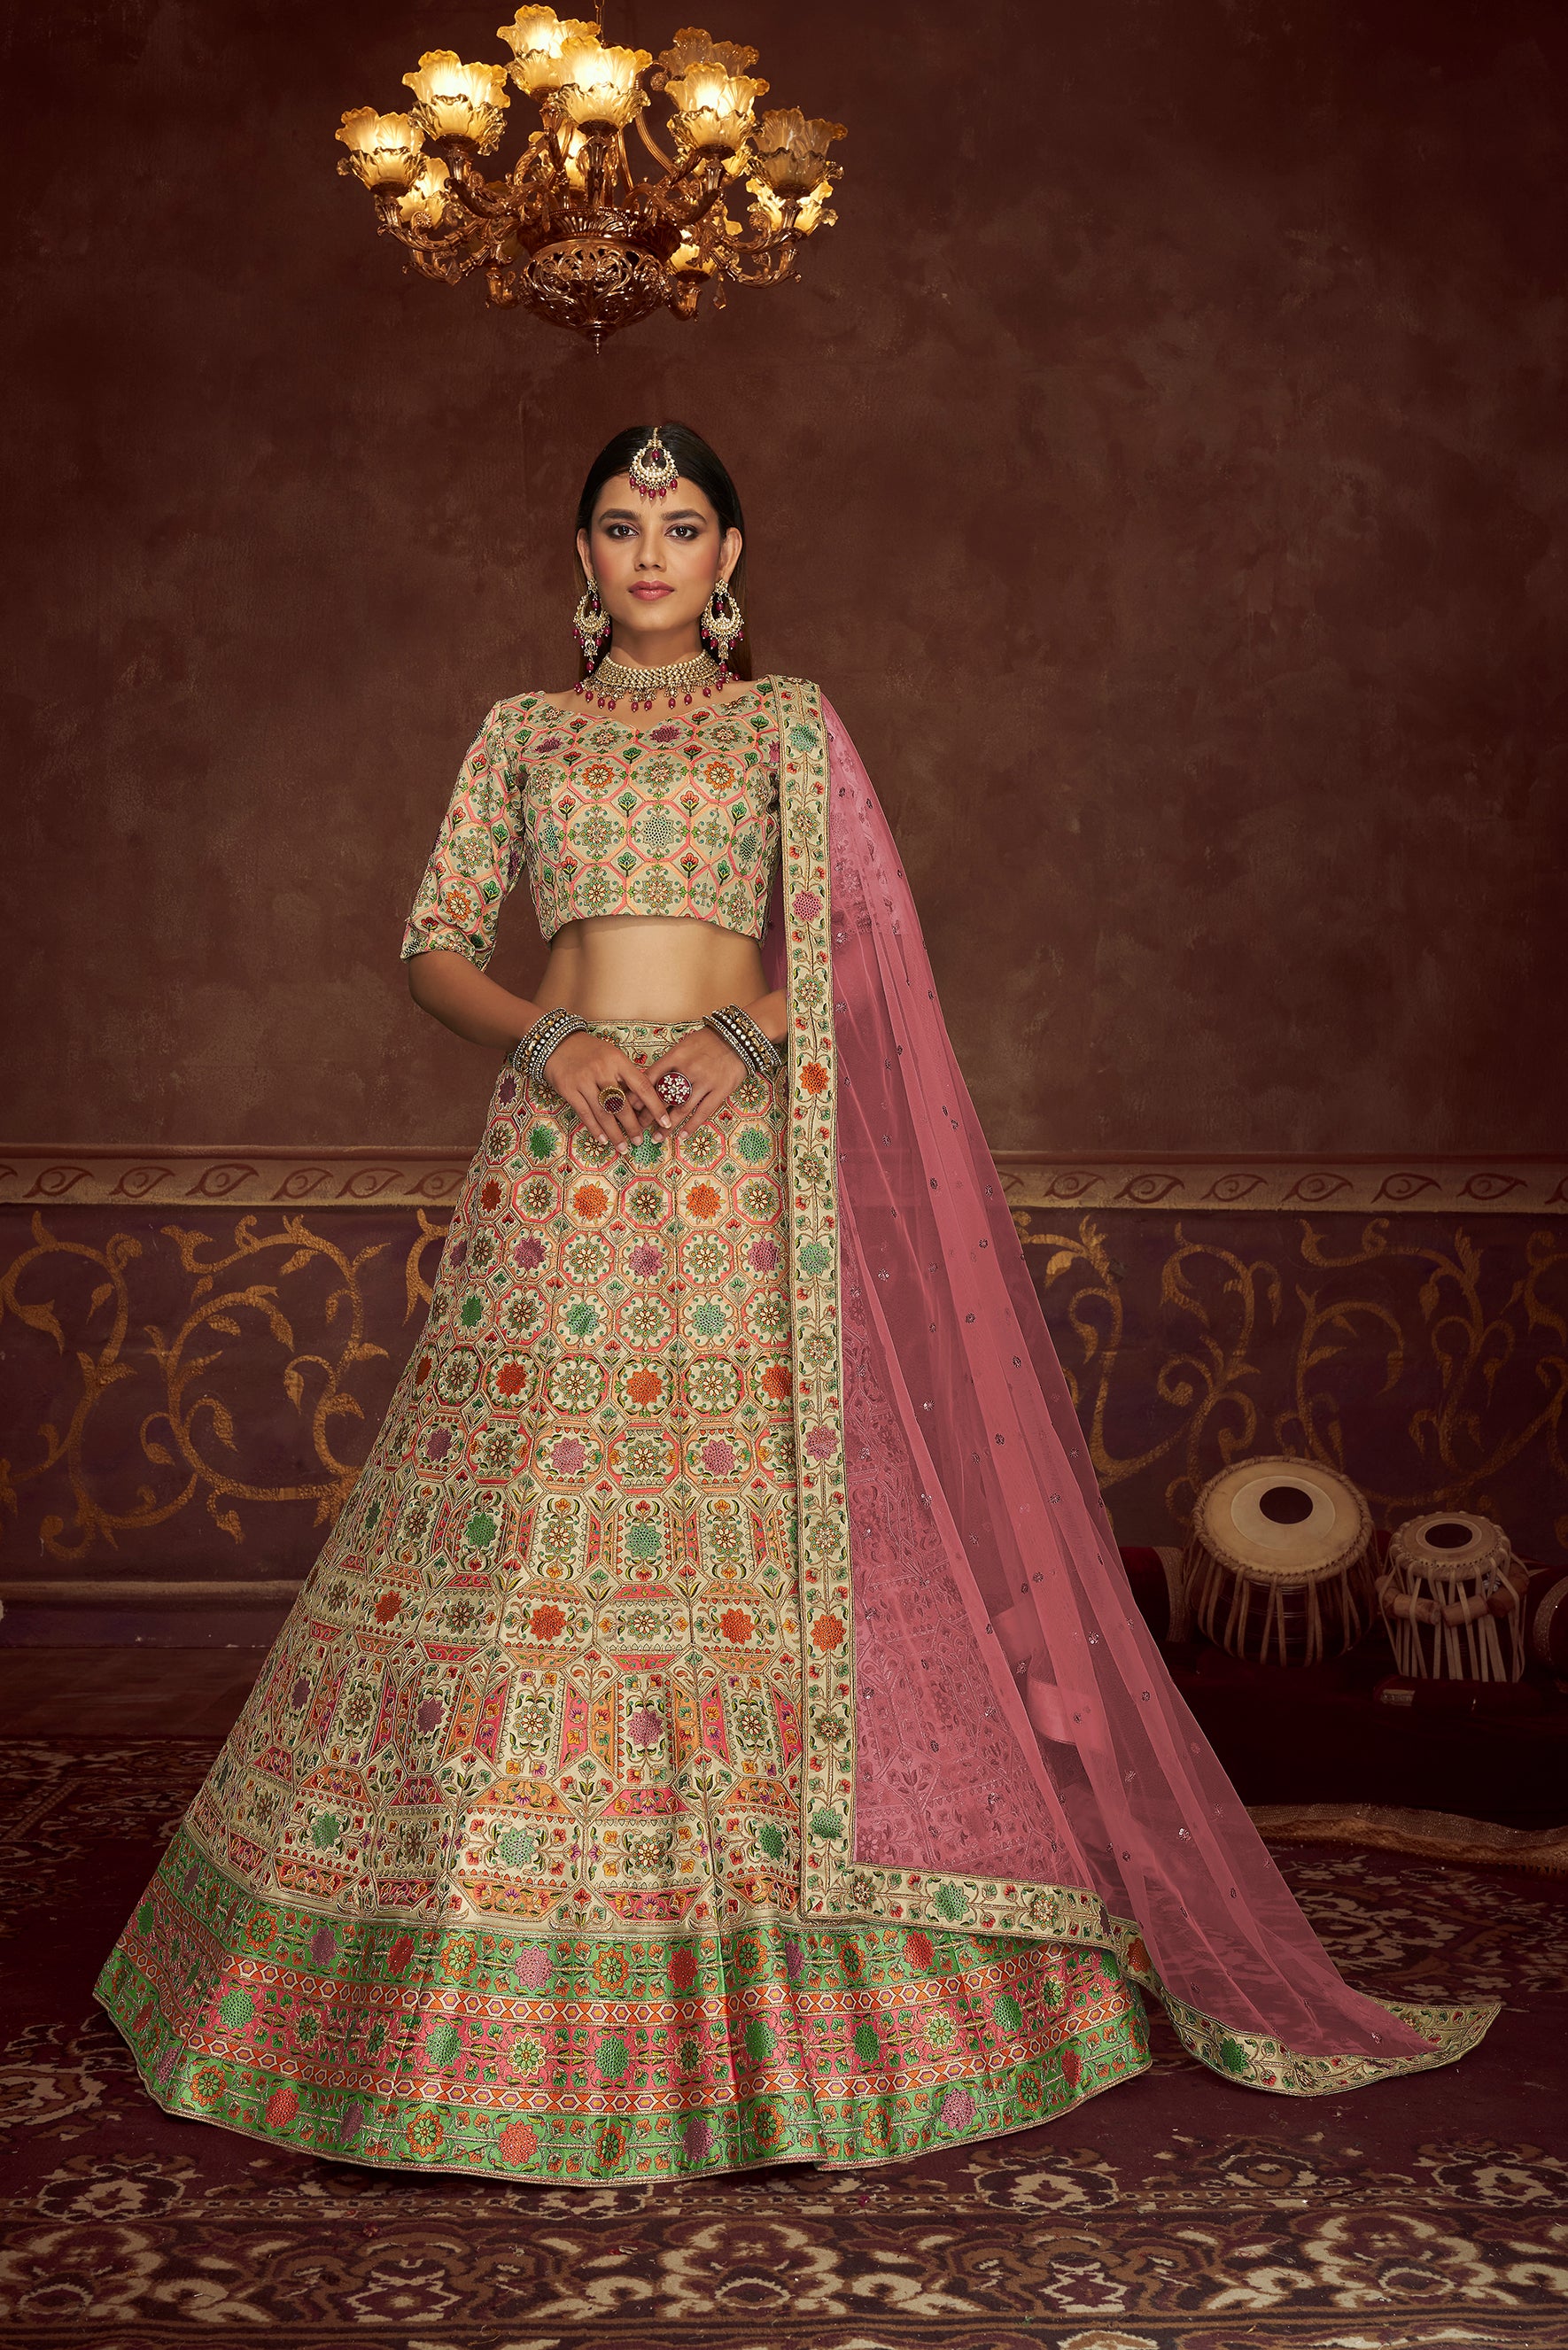 Beautiful Bridal Net Semi-Stitched Lehenga Choli at Rs 750 in Surat